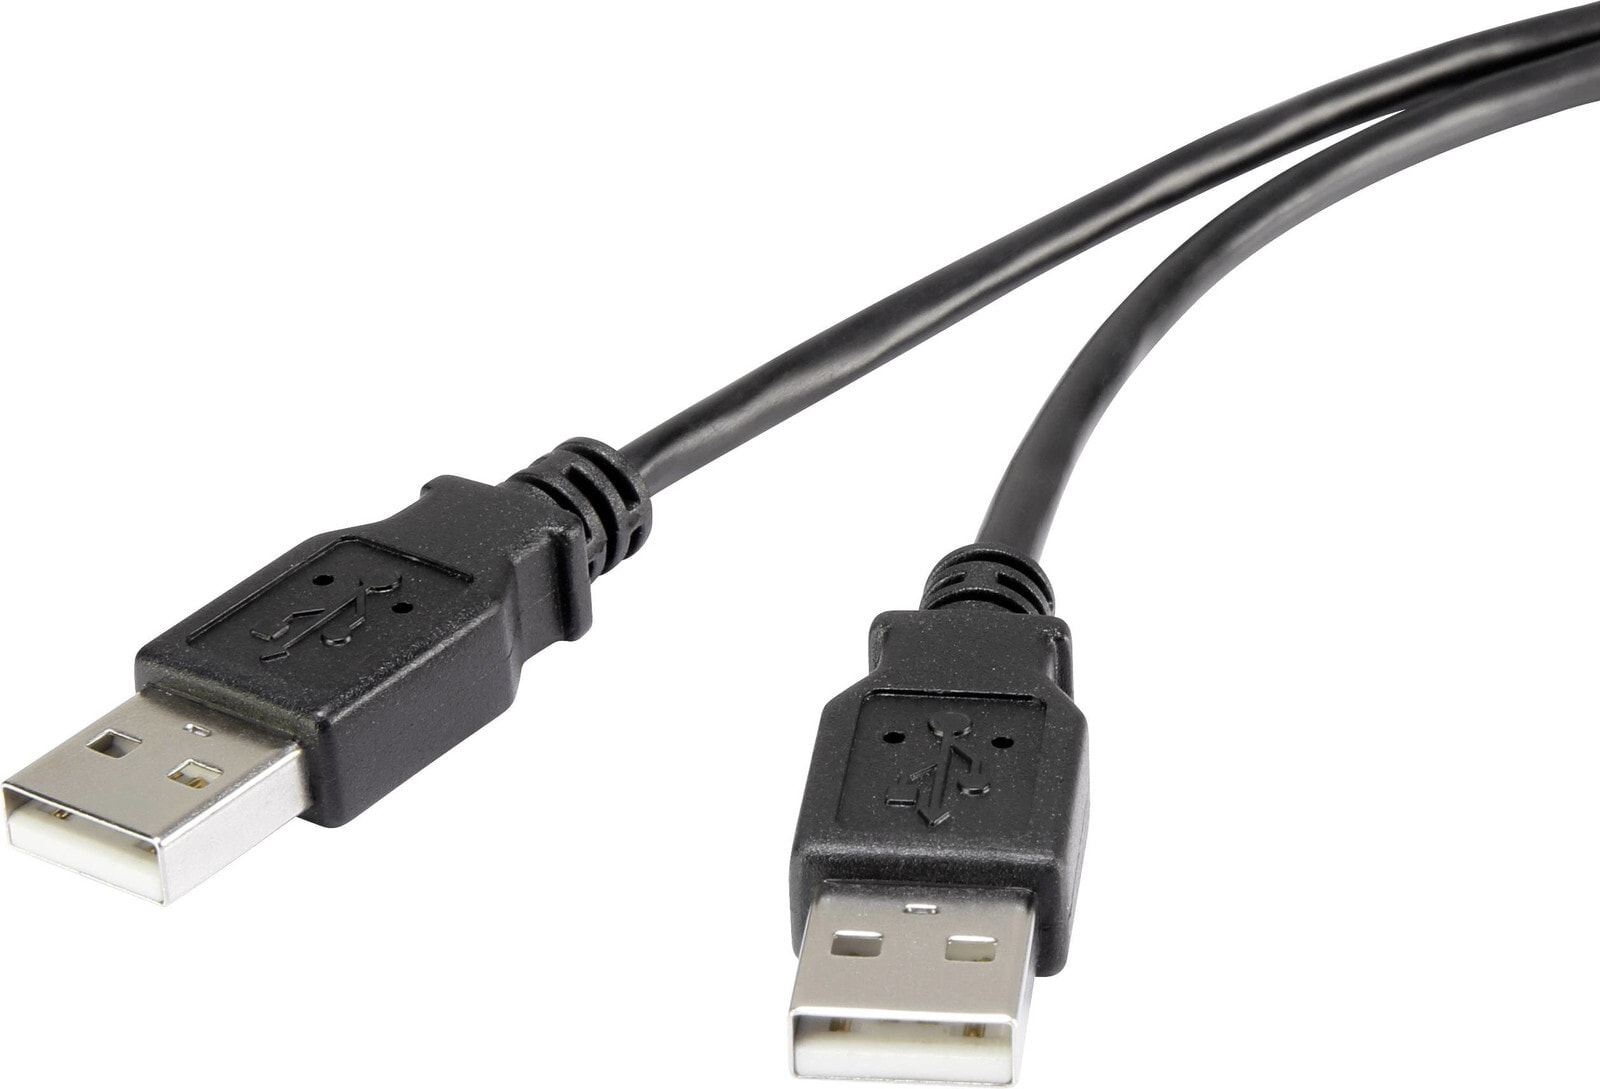 RF-4463028 - 1 m - USB A - USB A - USB 2.0 - 480 Mbit/s - Black